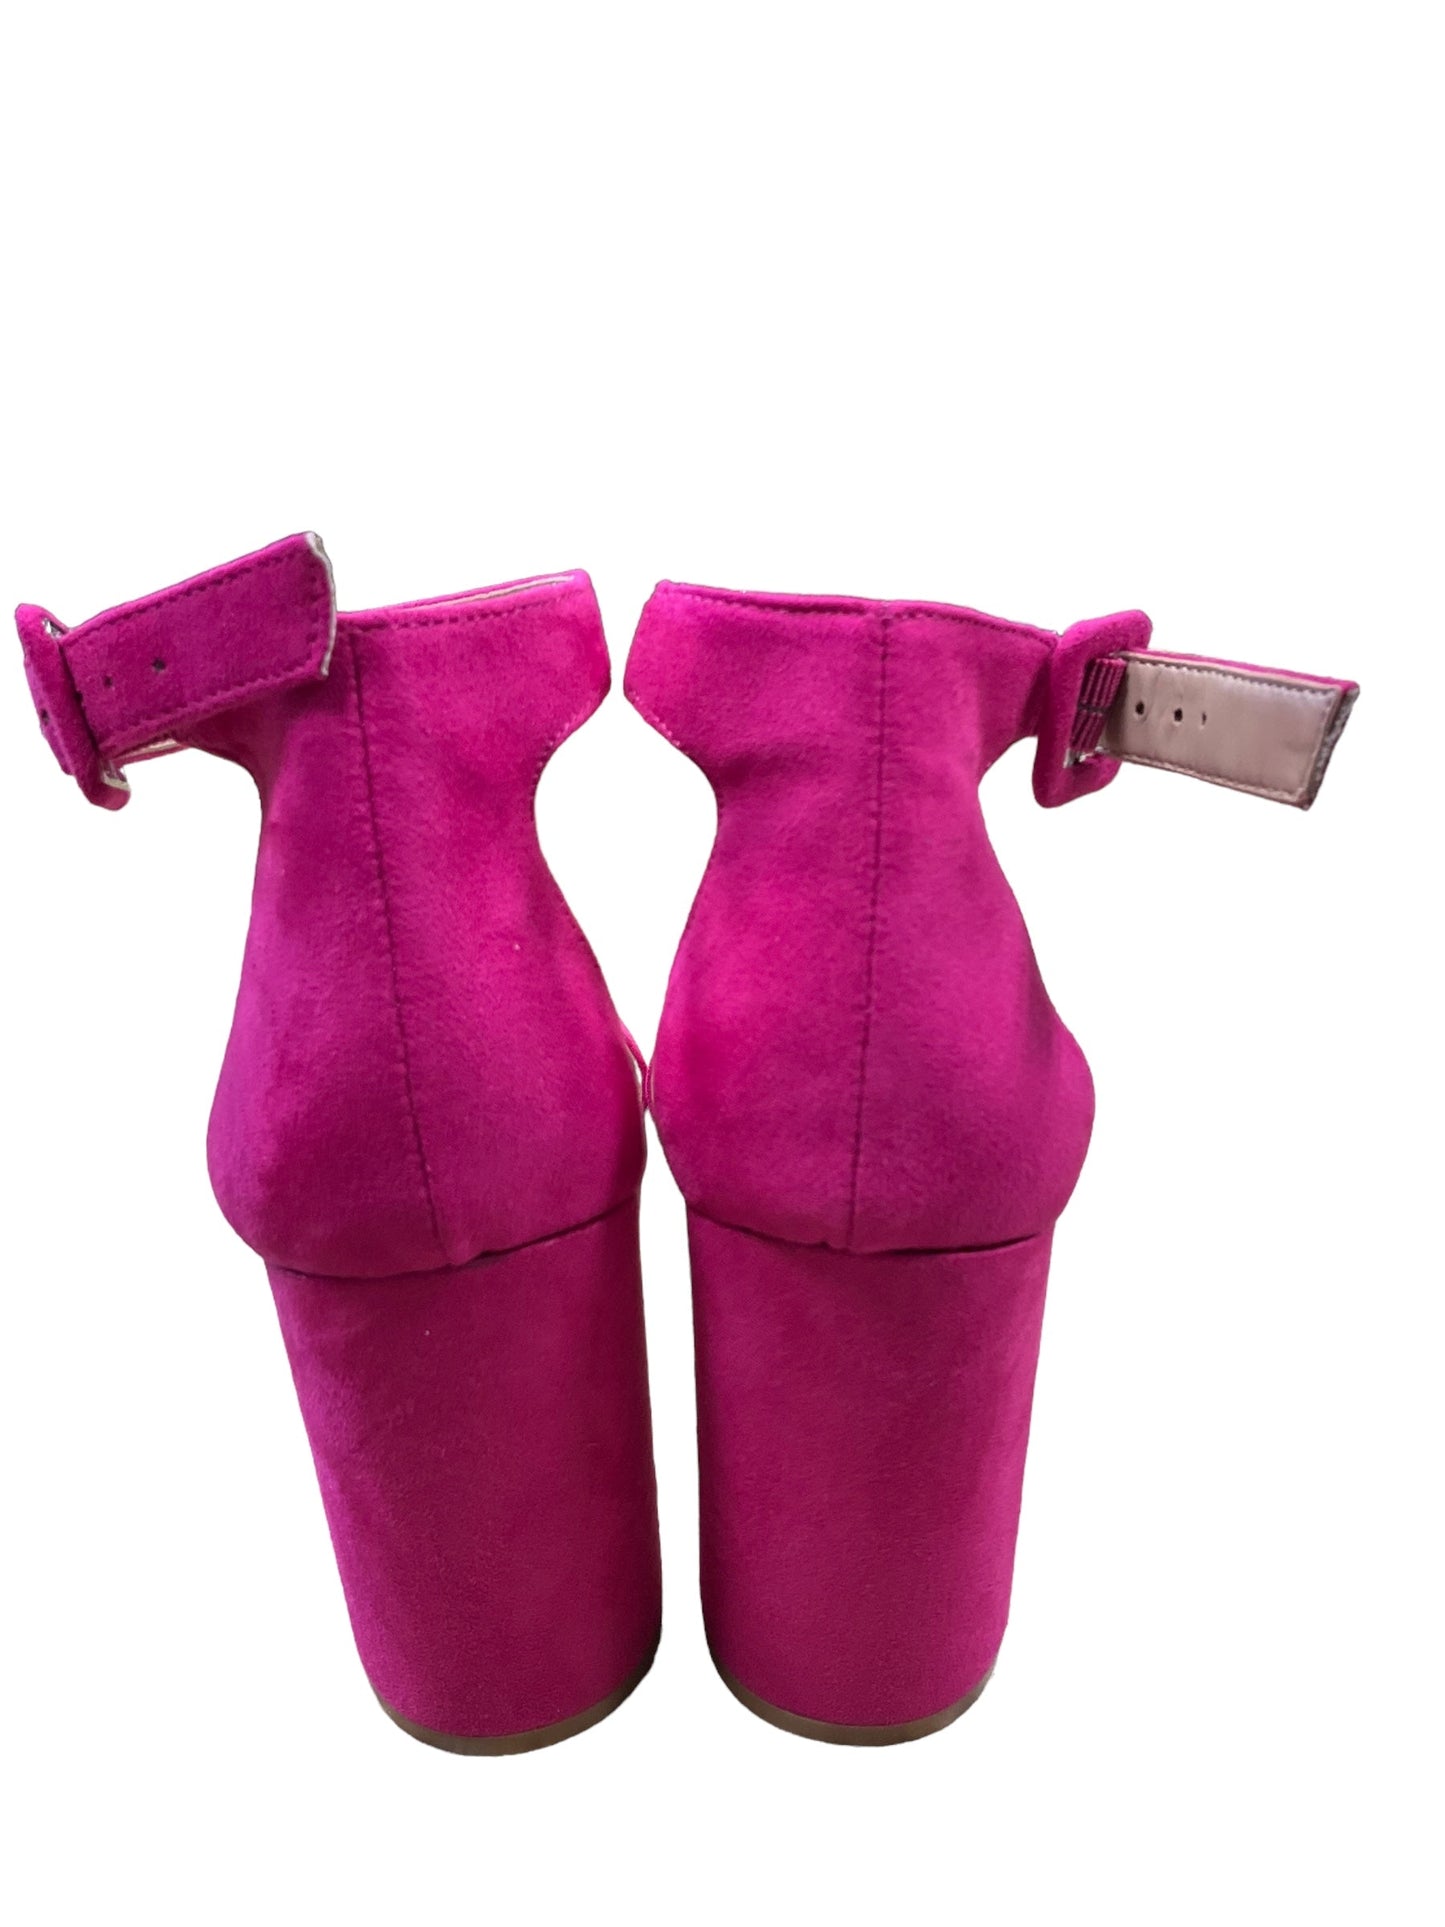 Pink Shoes Heels Block Mix No 6, Size 9.5